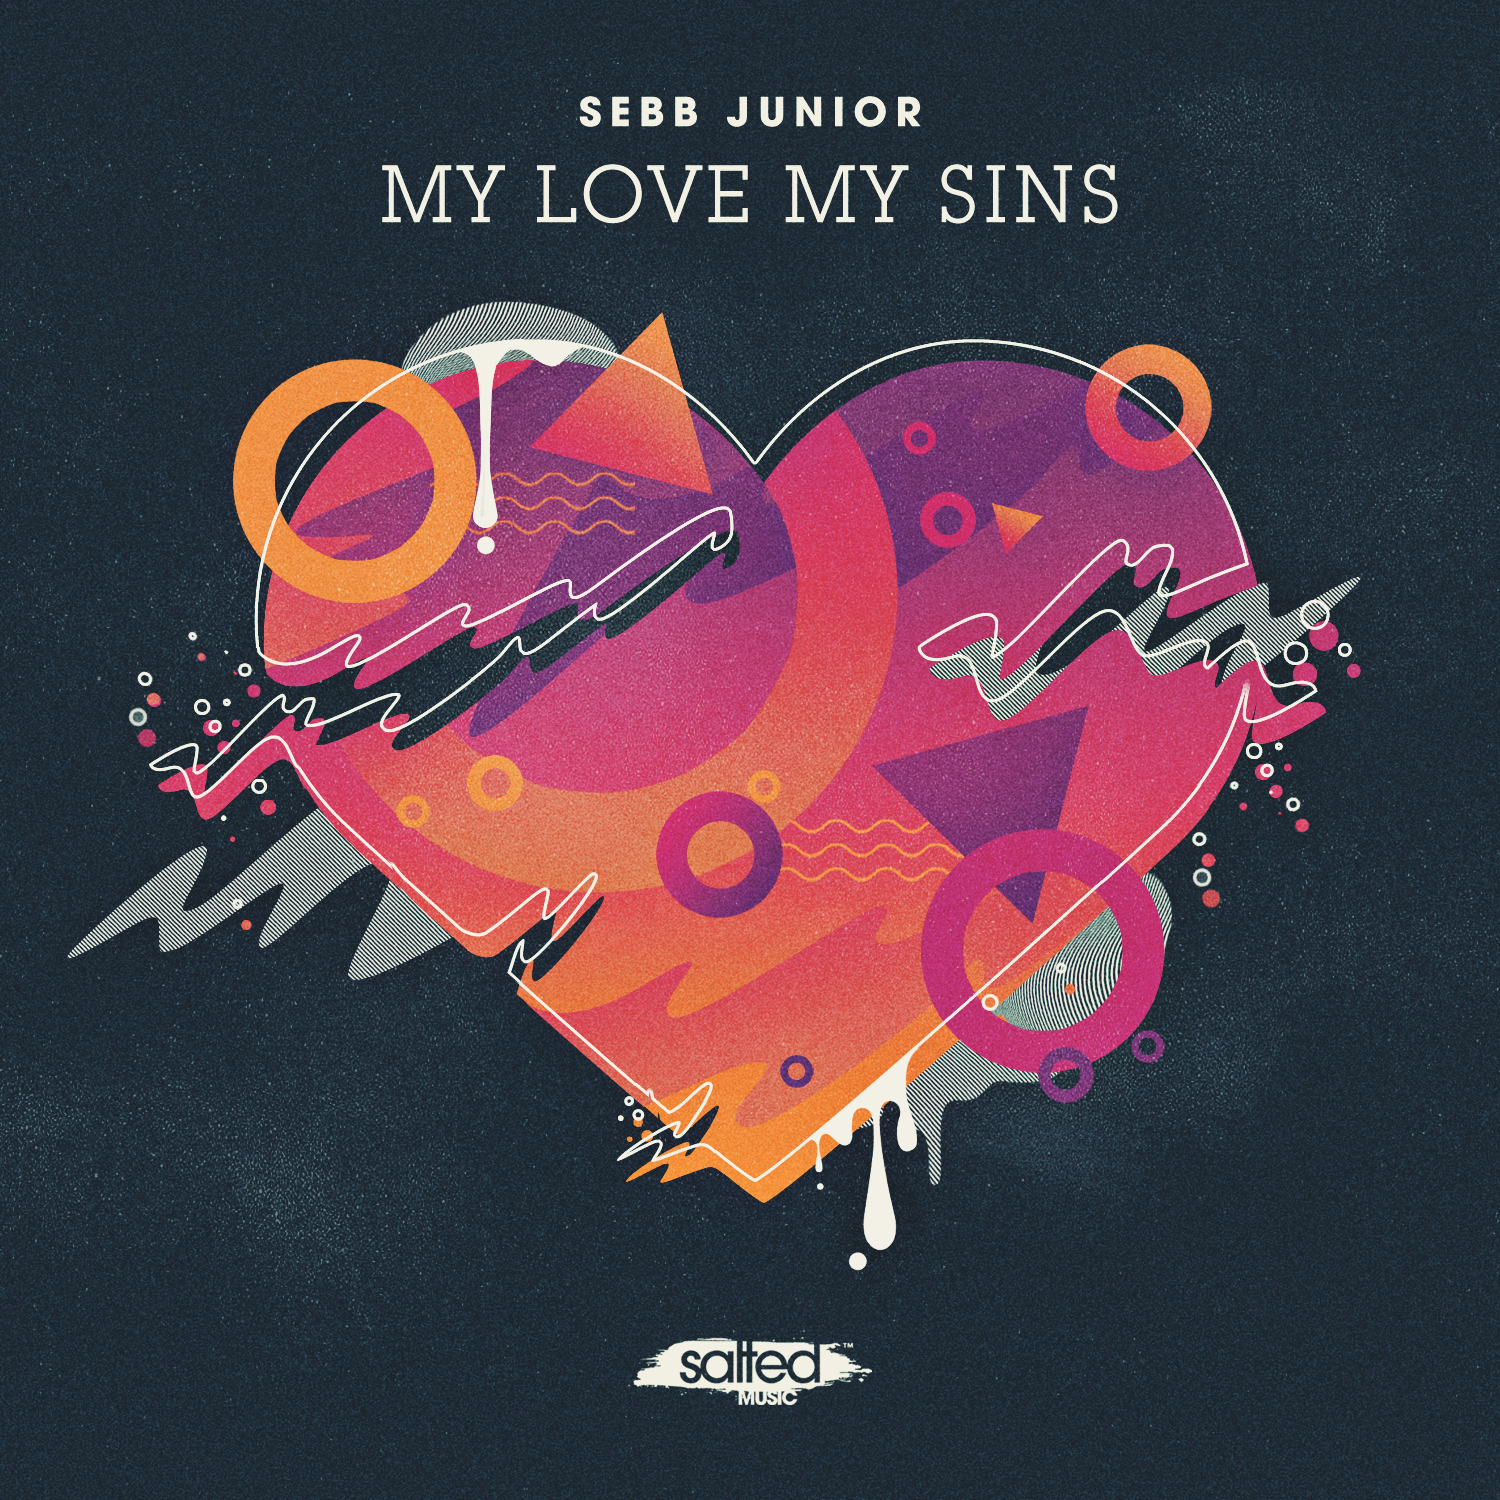 SLT091 - My Love My Sins EP - Sebb Junior (Salted Music)